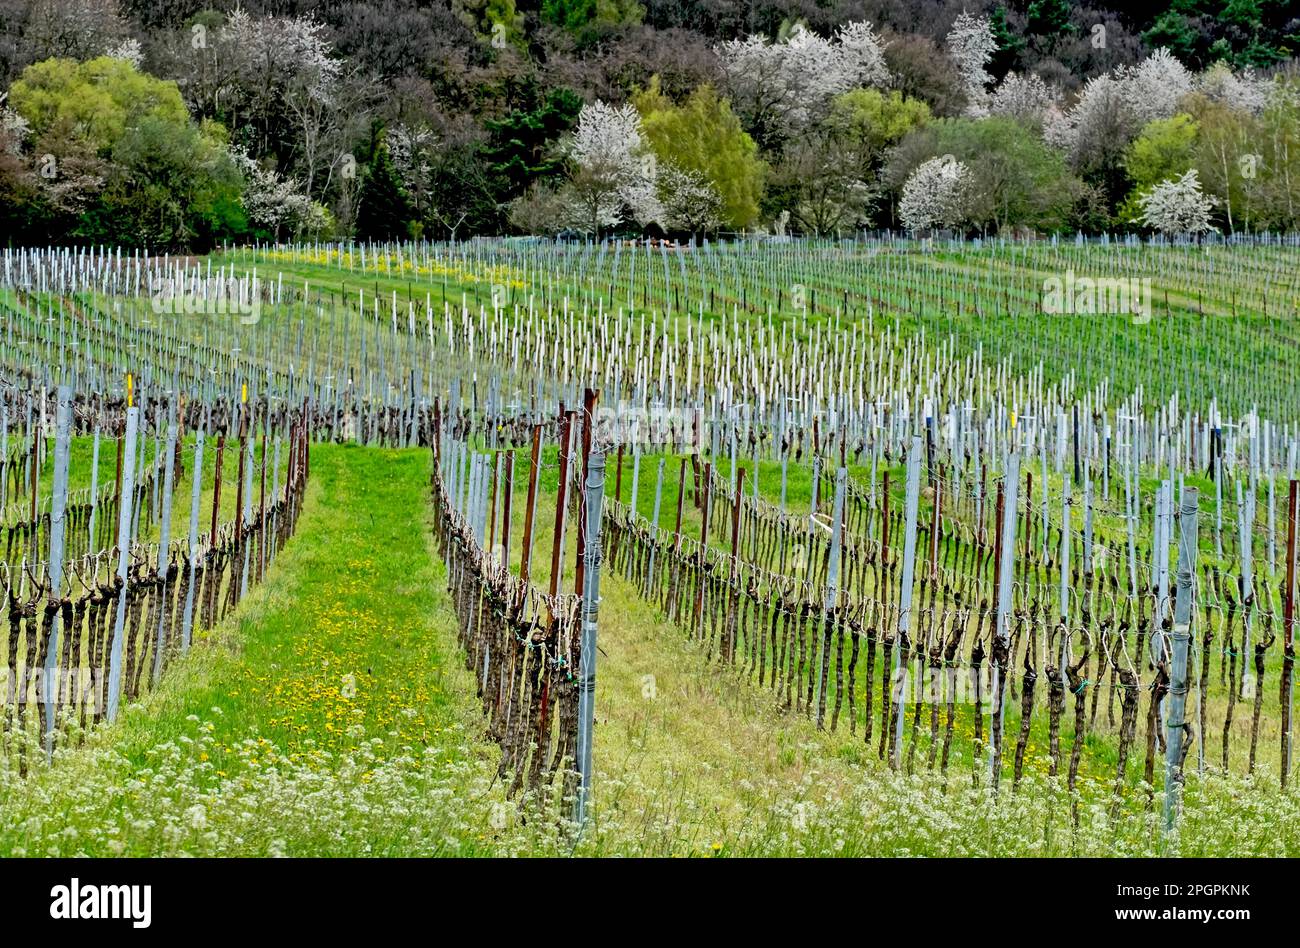 Spring in the vineyard Stock Photo